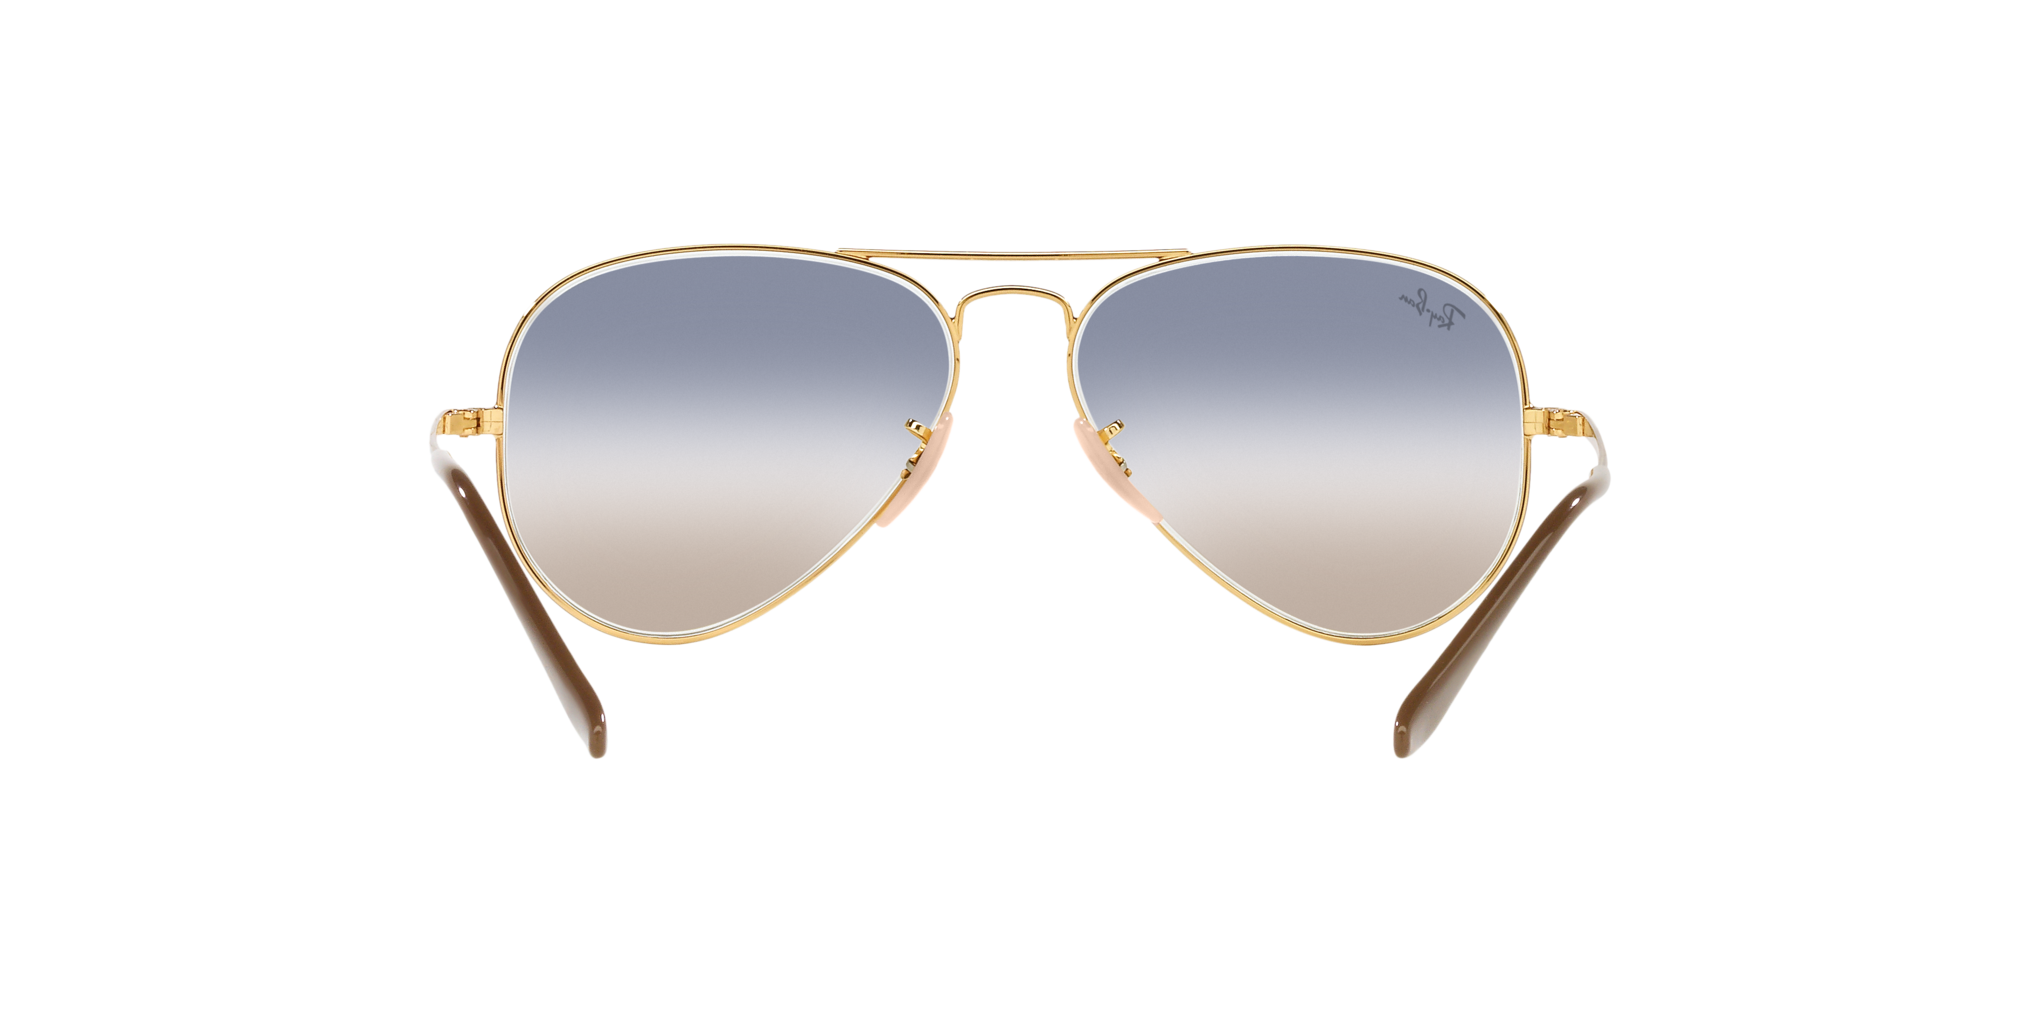 Buy Ray-Ban Aviator Metal Ii Sunglasses Online.